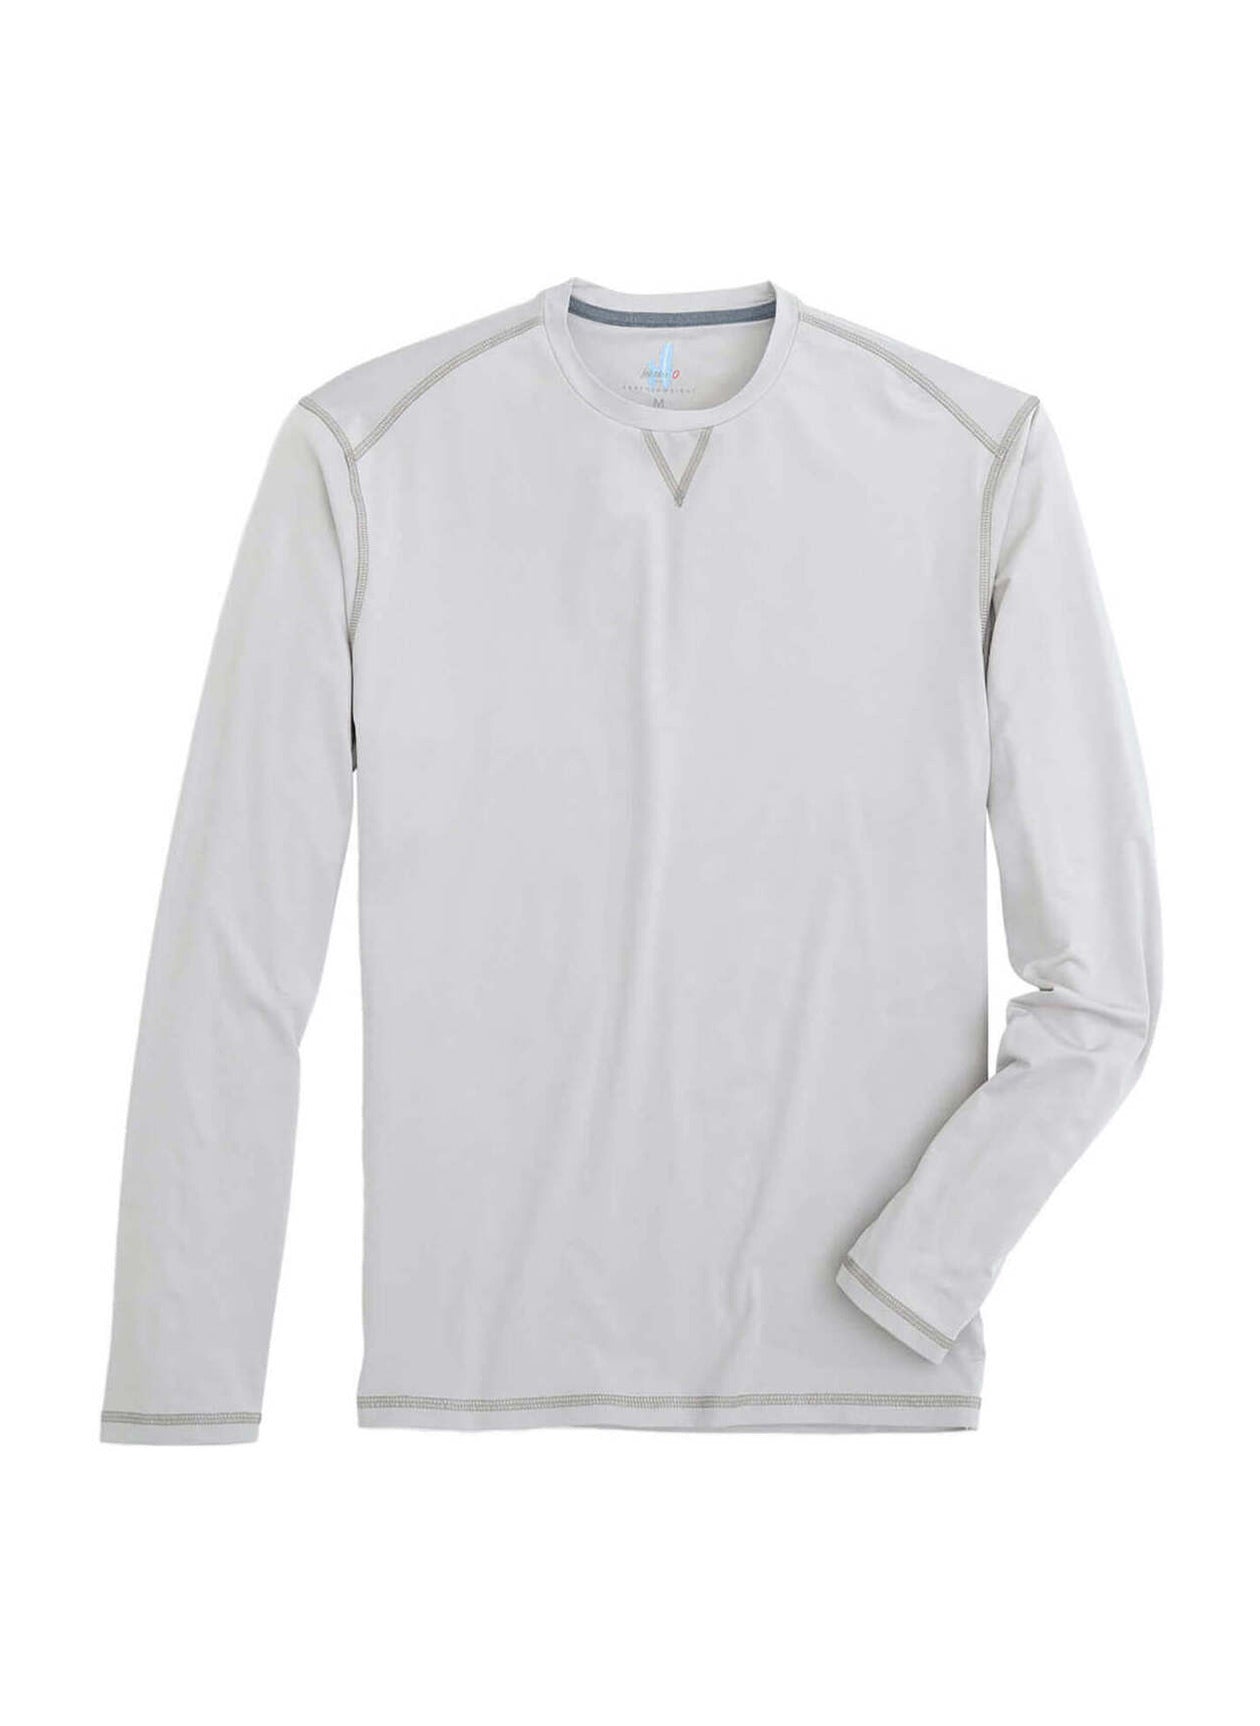 Johnnie-O Men's Runner PREP-FORMANCE Long Sleeve T-Shirt - Quarry Grey